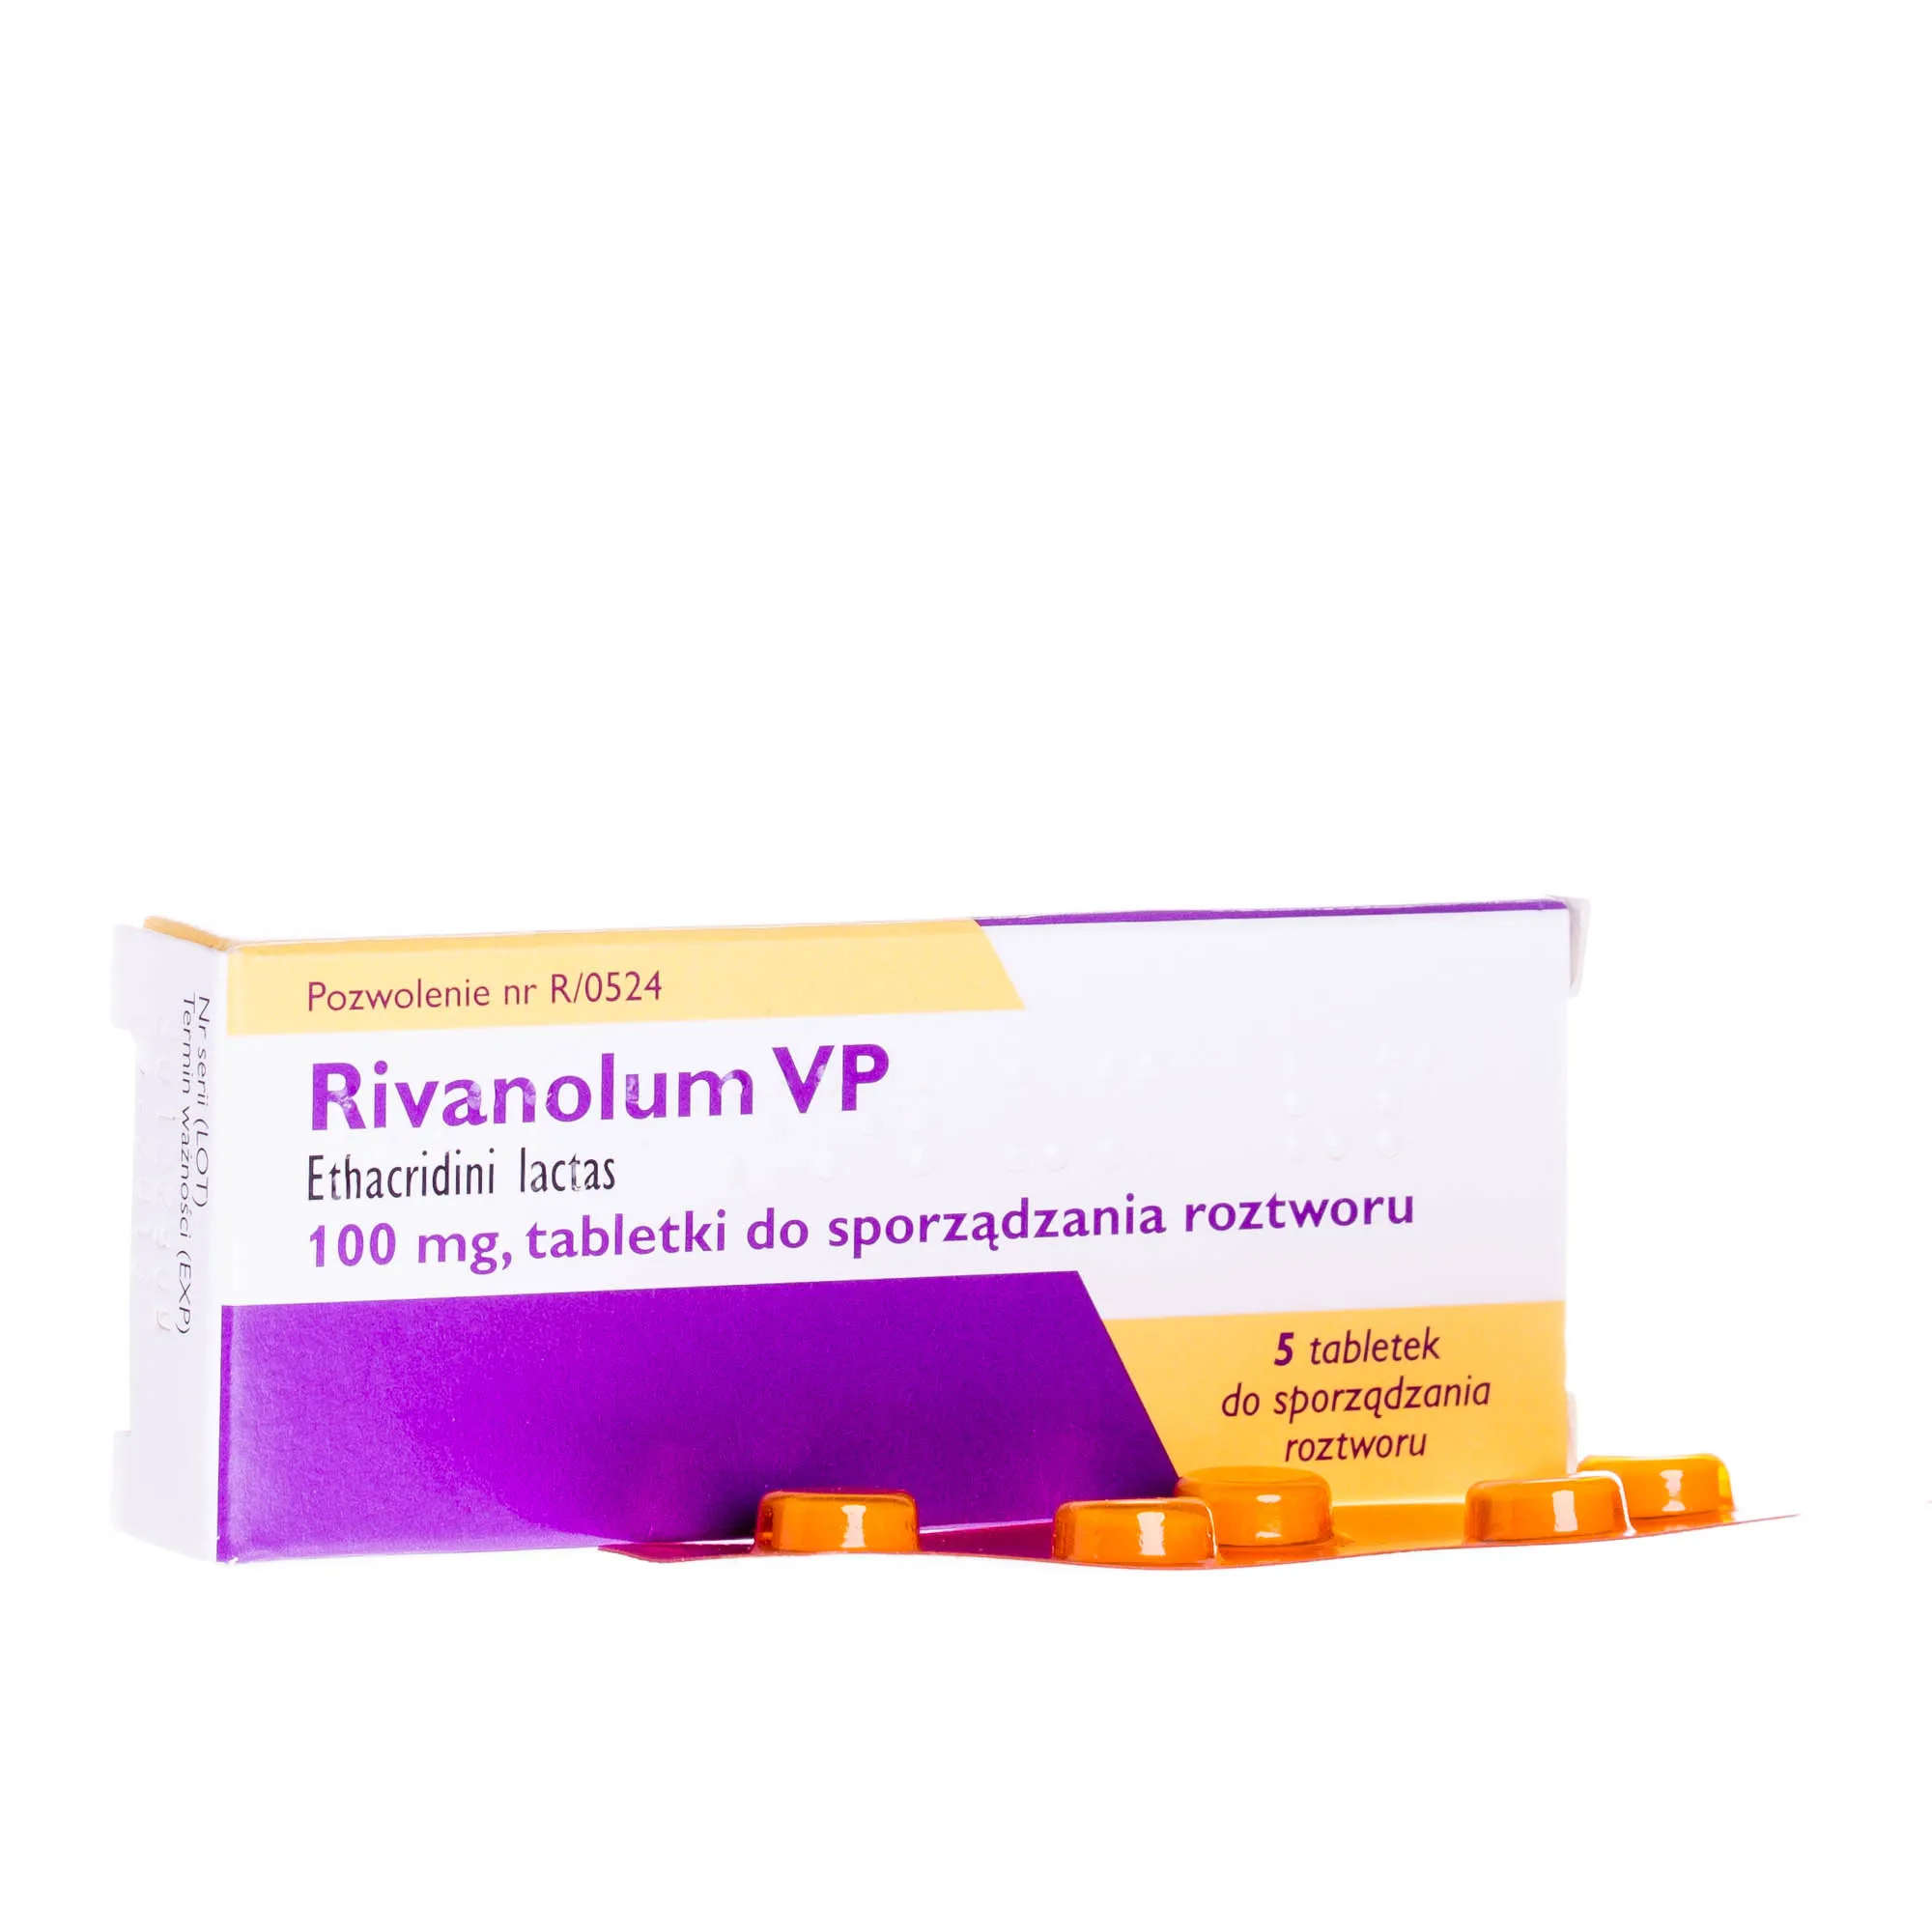 Rivanolum VP, Ethacridini lactas 100 mg, 5 tabletek do sporządzania roztworu